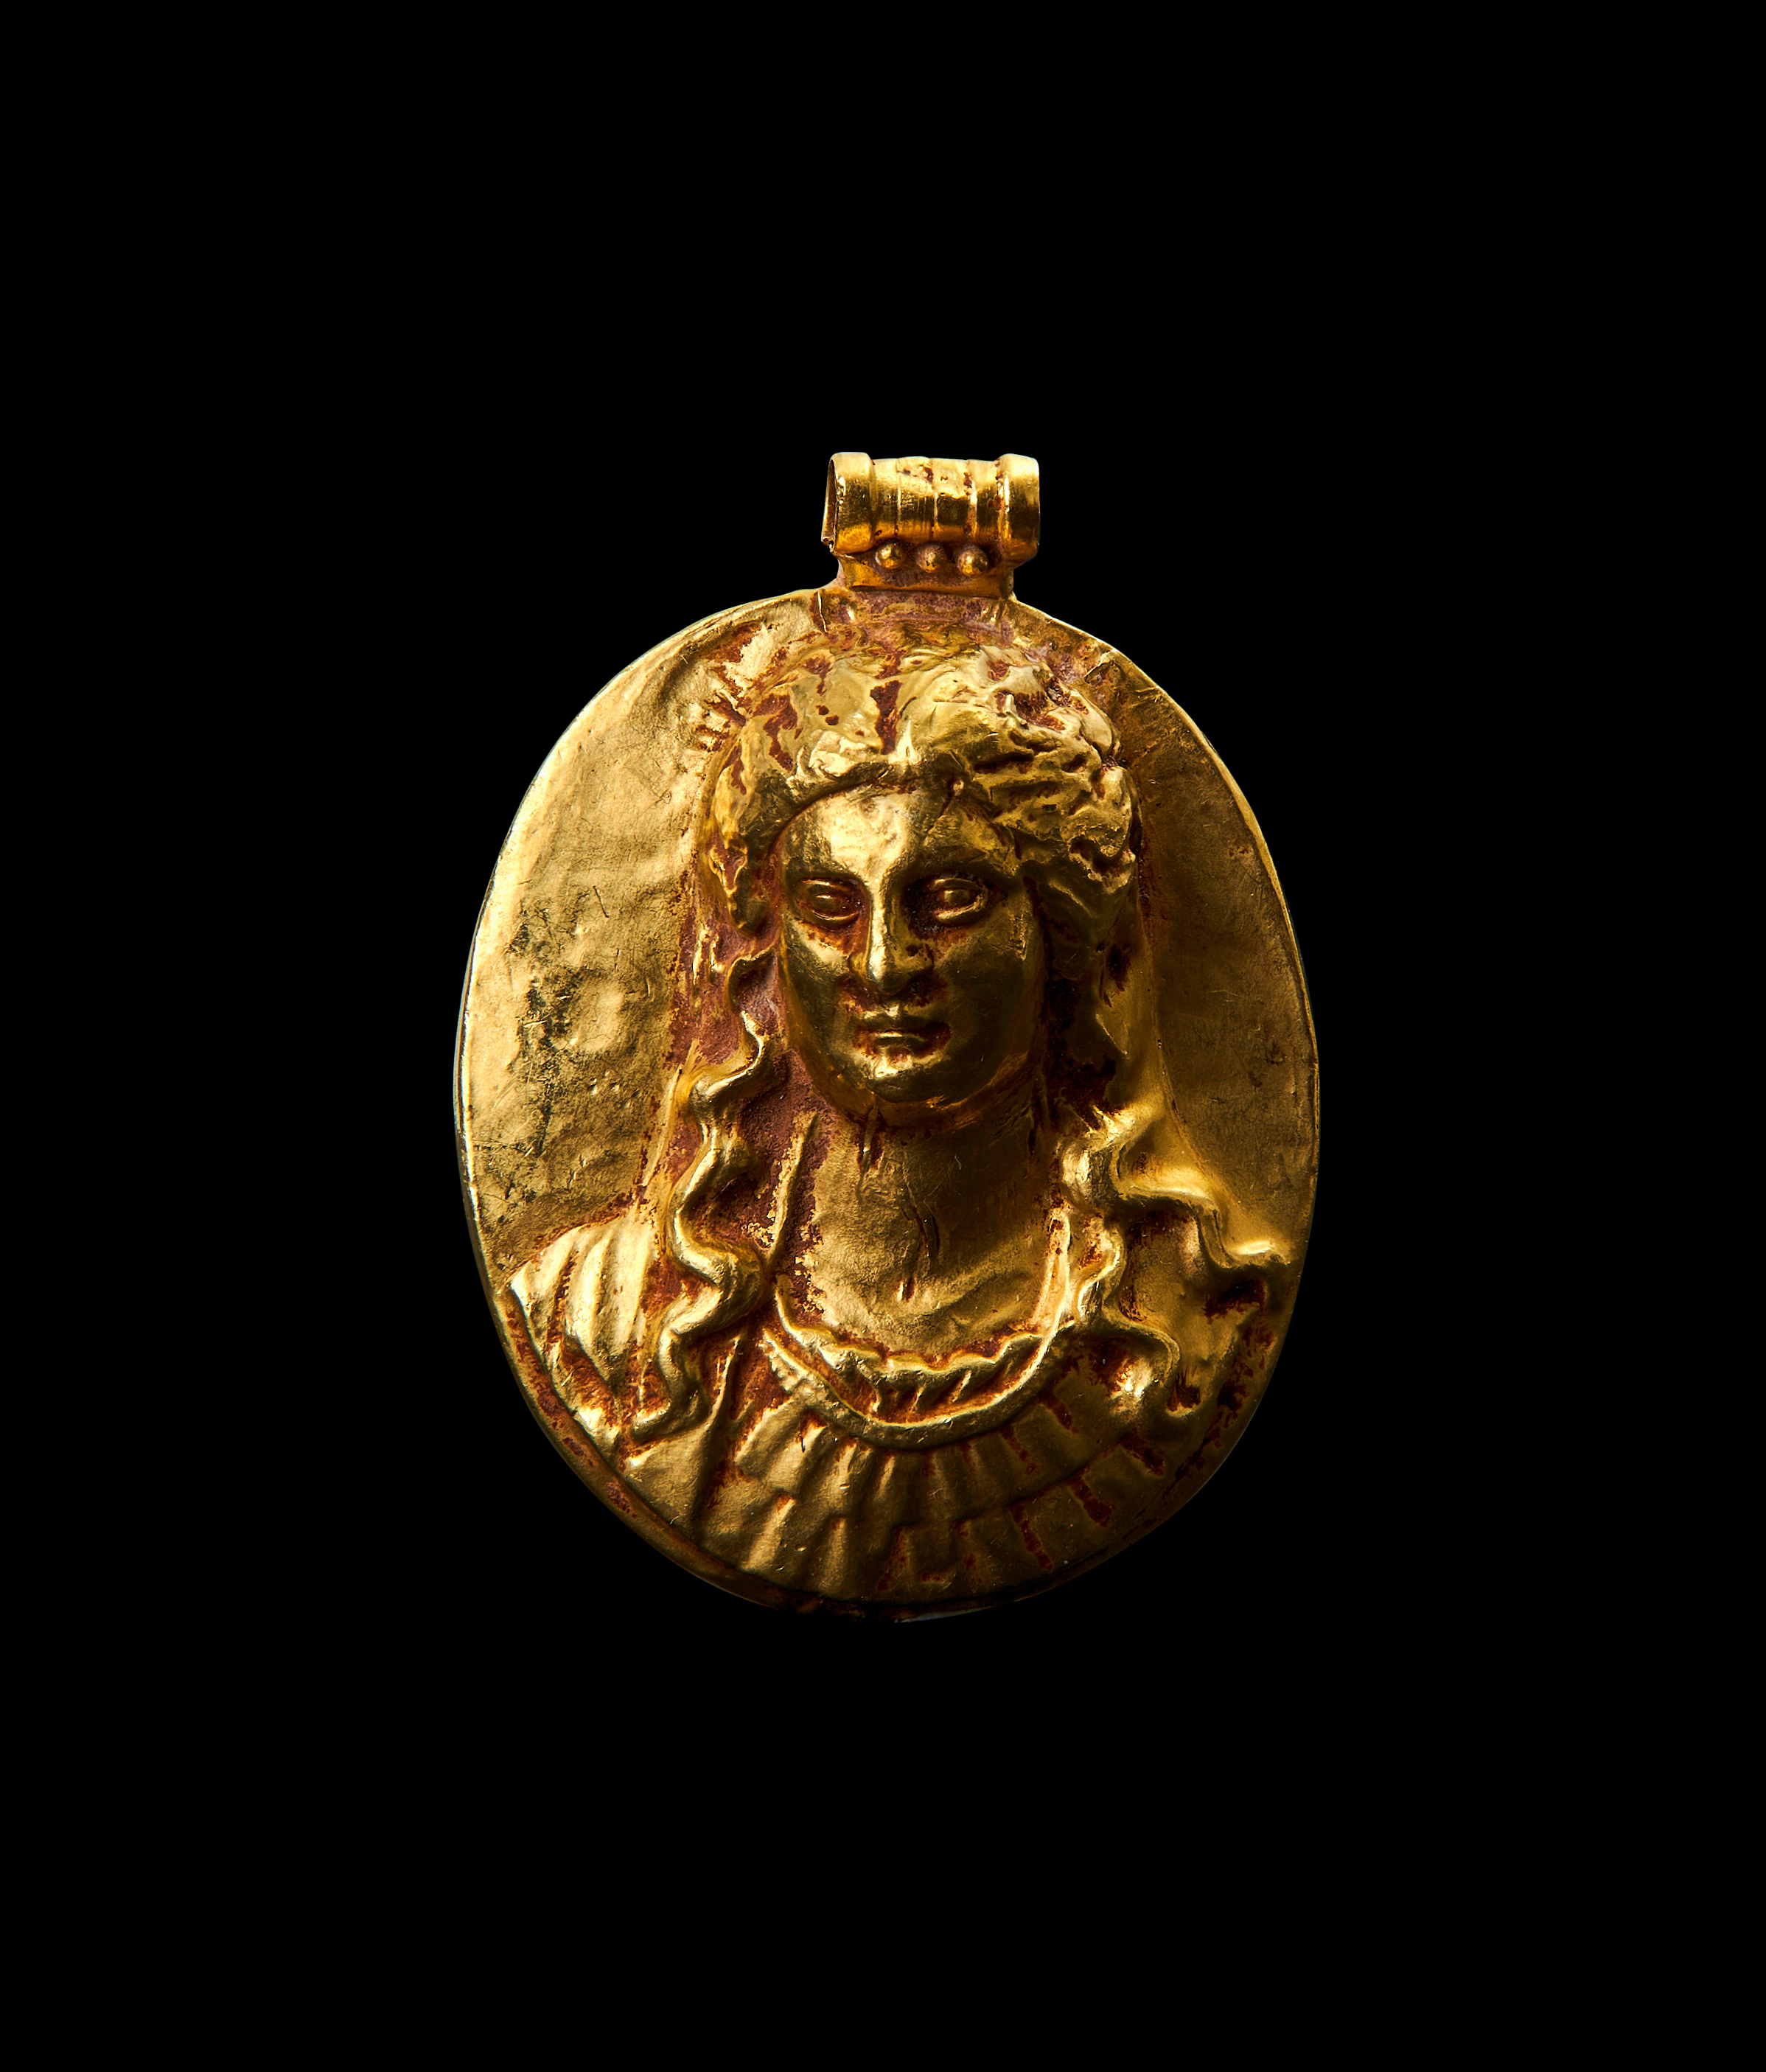 A ROMAN GOLD PENDANT DEPICTING VENUS (APHRODITE), CIRCA 1ST CENTURY A.D.